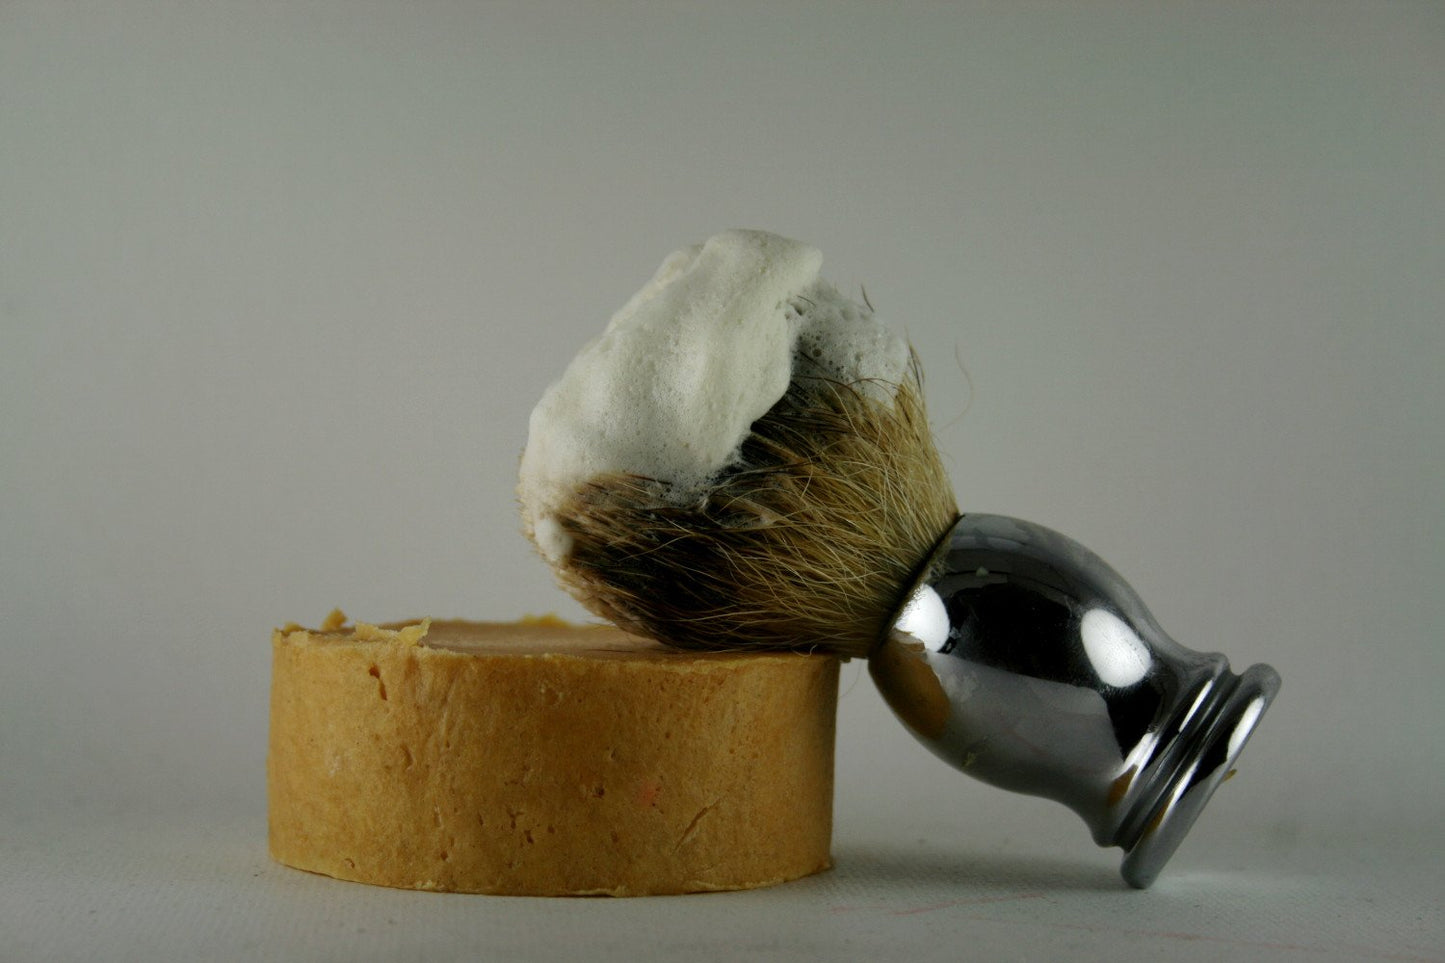 Woodland Spice Artisan Shave Soap, Natural Shaving